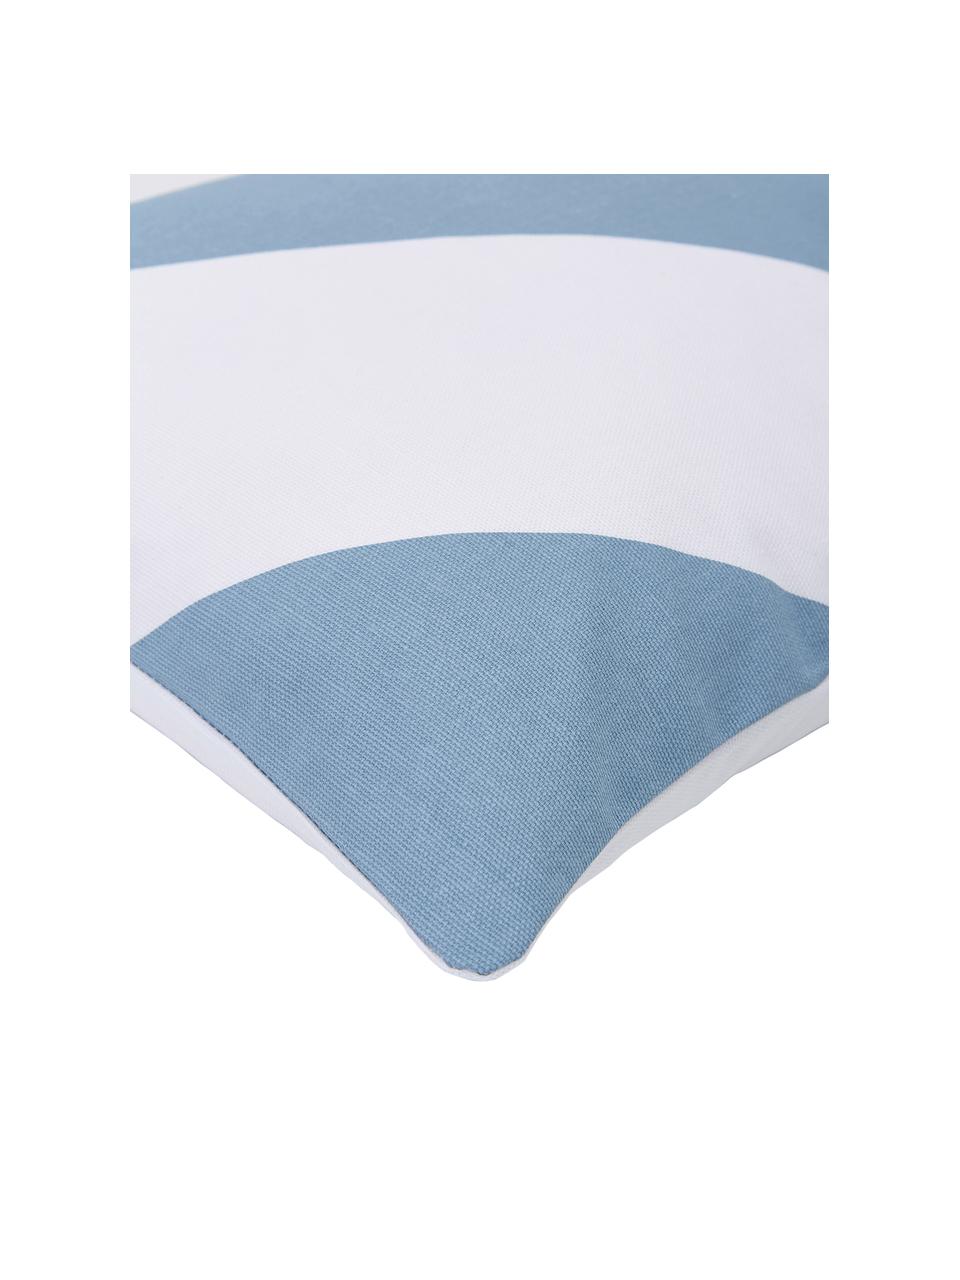 Gestreepte kussenhoes Ren in lichtblauw/wit, 100% katoen, Wit, lichtblauw, 30 x 50 cm